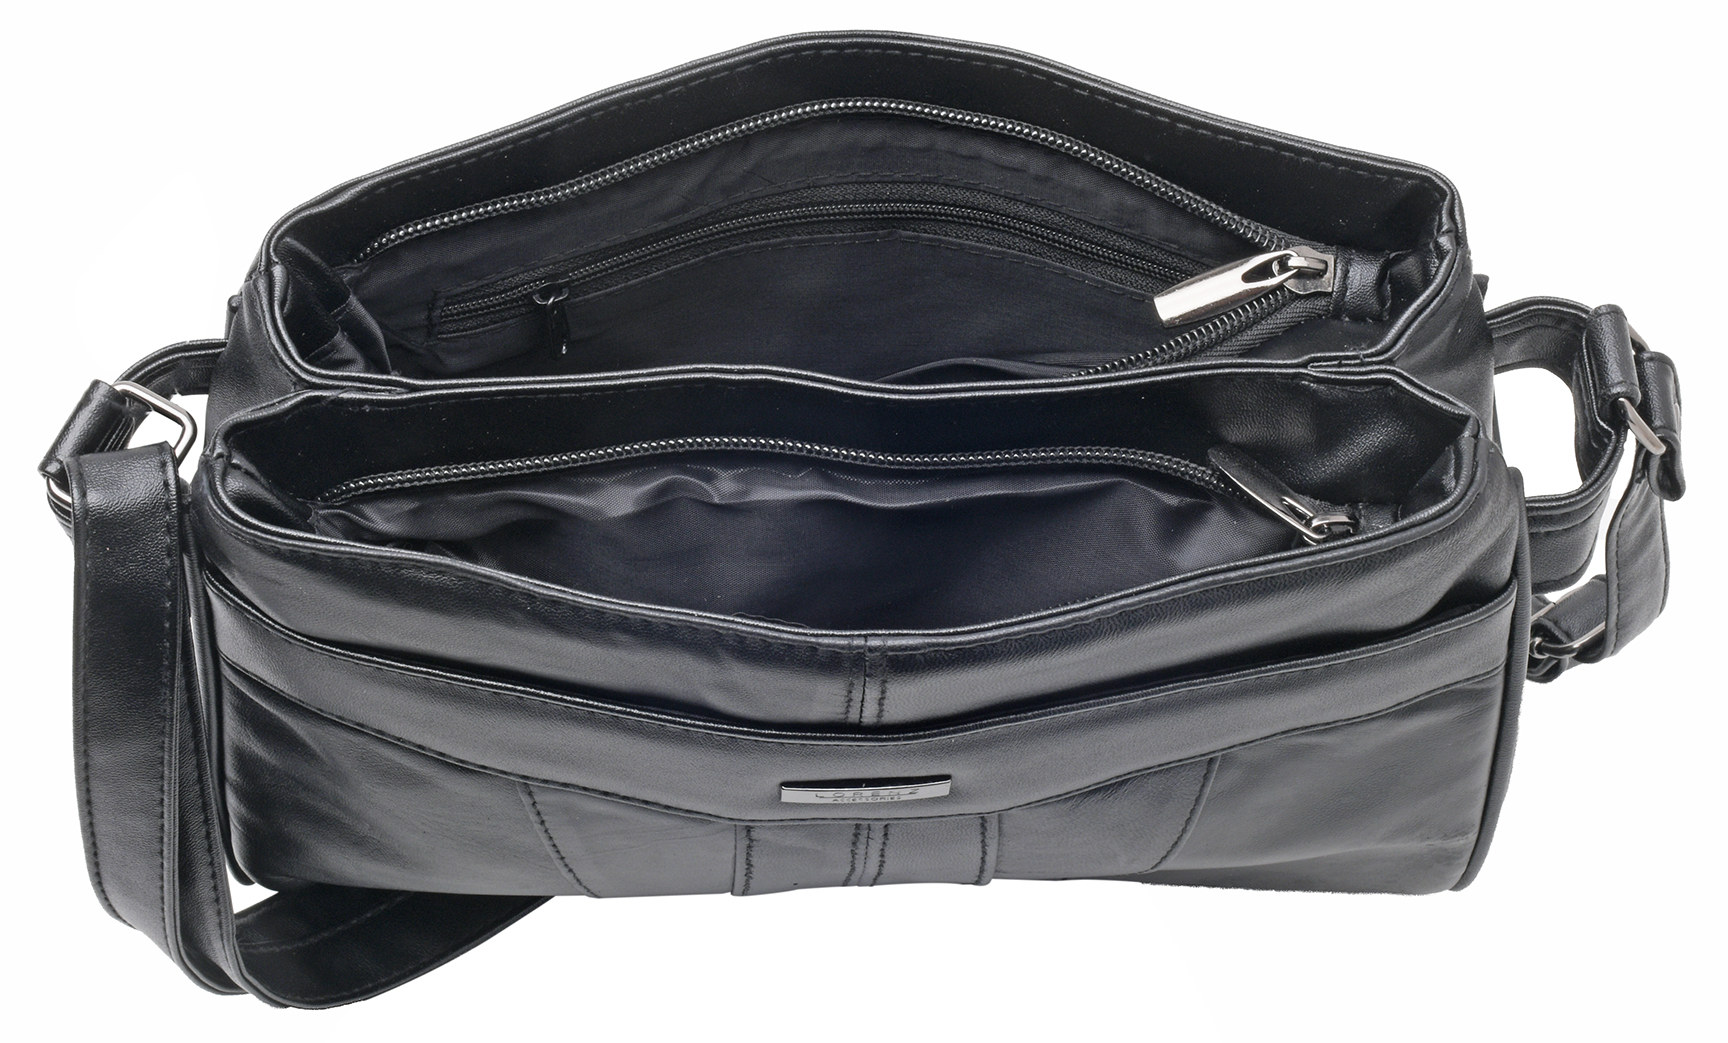 Ladies Super Soft Nappa Leather Multi Zip Cross Body Shoulder Bag Handbag Black | eBay